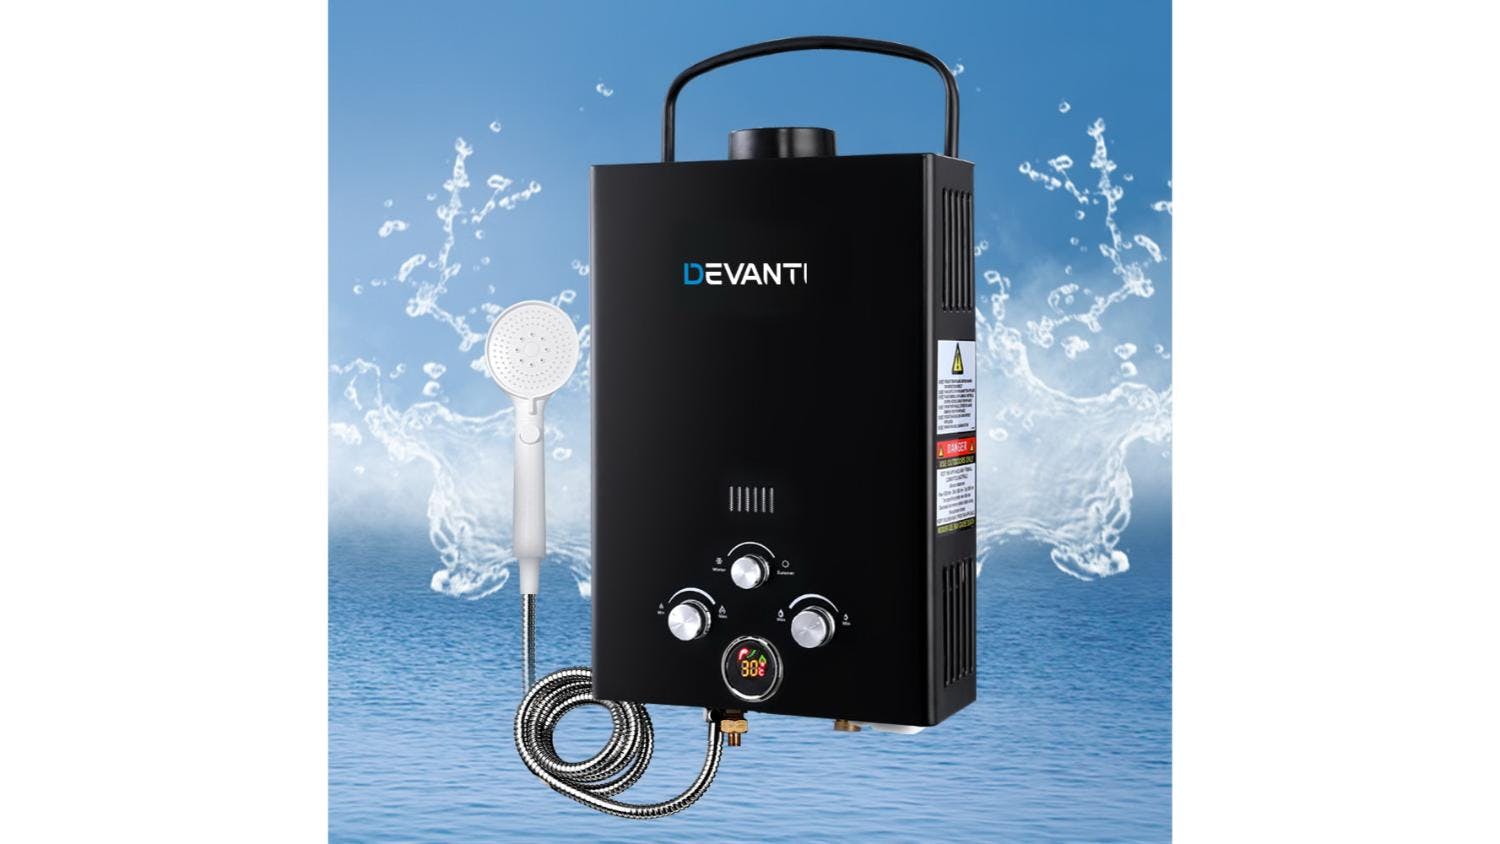 Devanti Portable LPG Hot Water System with Shower 8L - Black